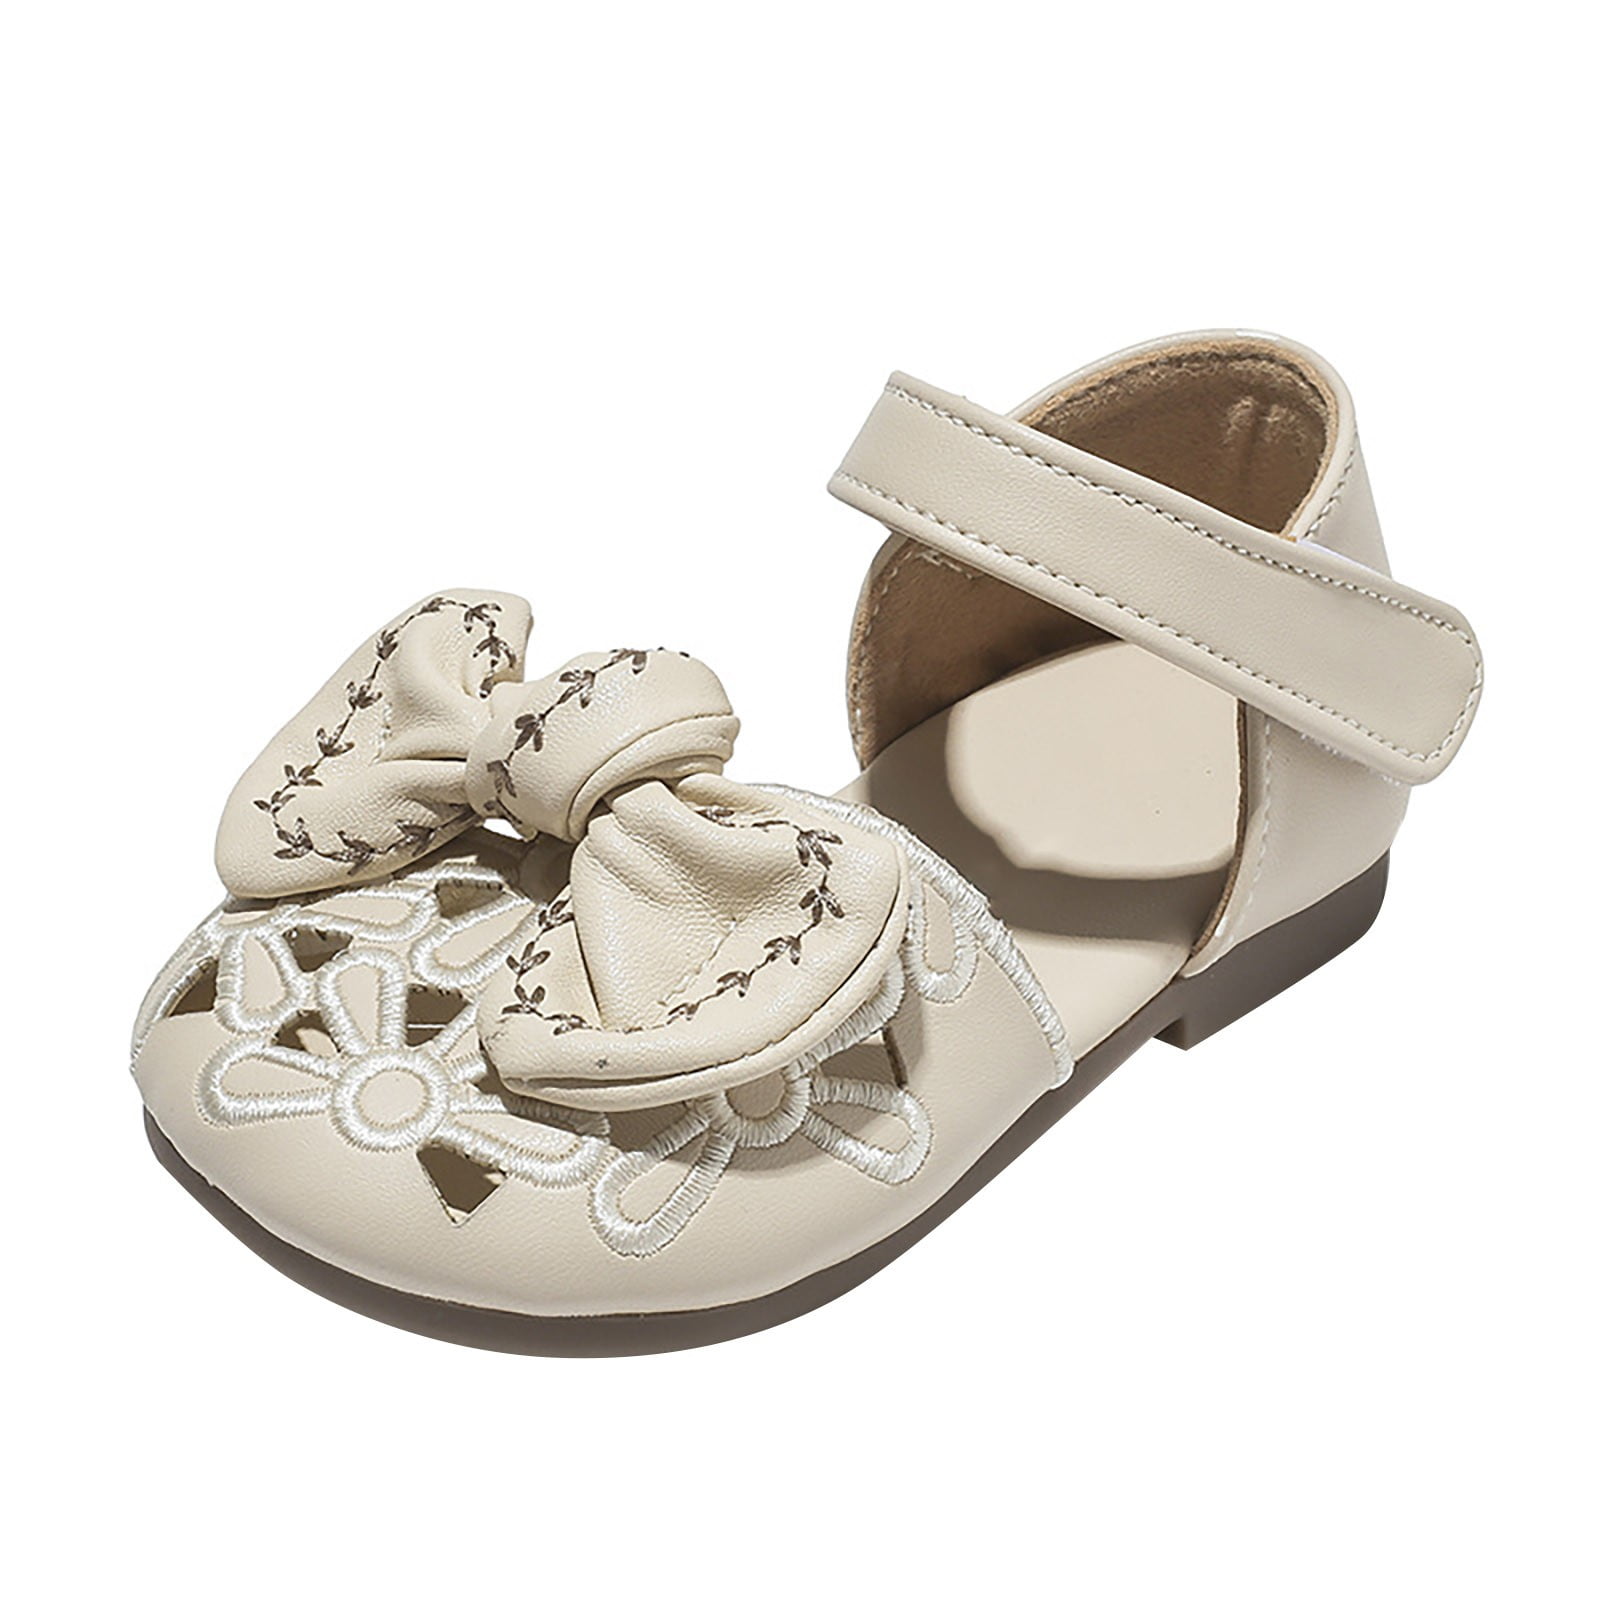 Rrunsv Baby Shoes Girls Platform Sandals Closed Toe Lace Up Ankle Strap ...